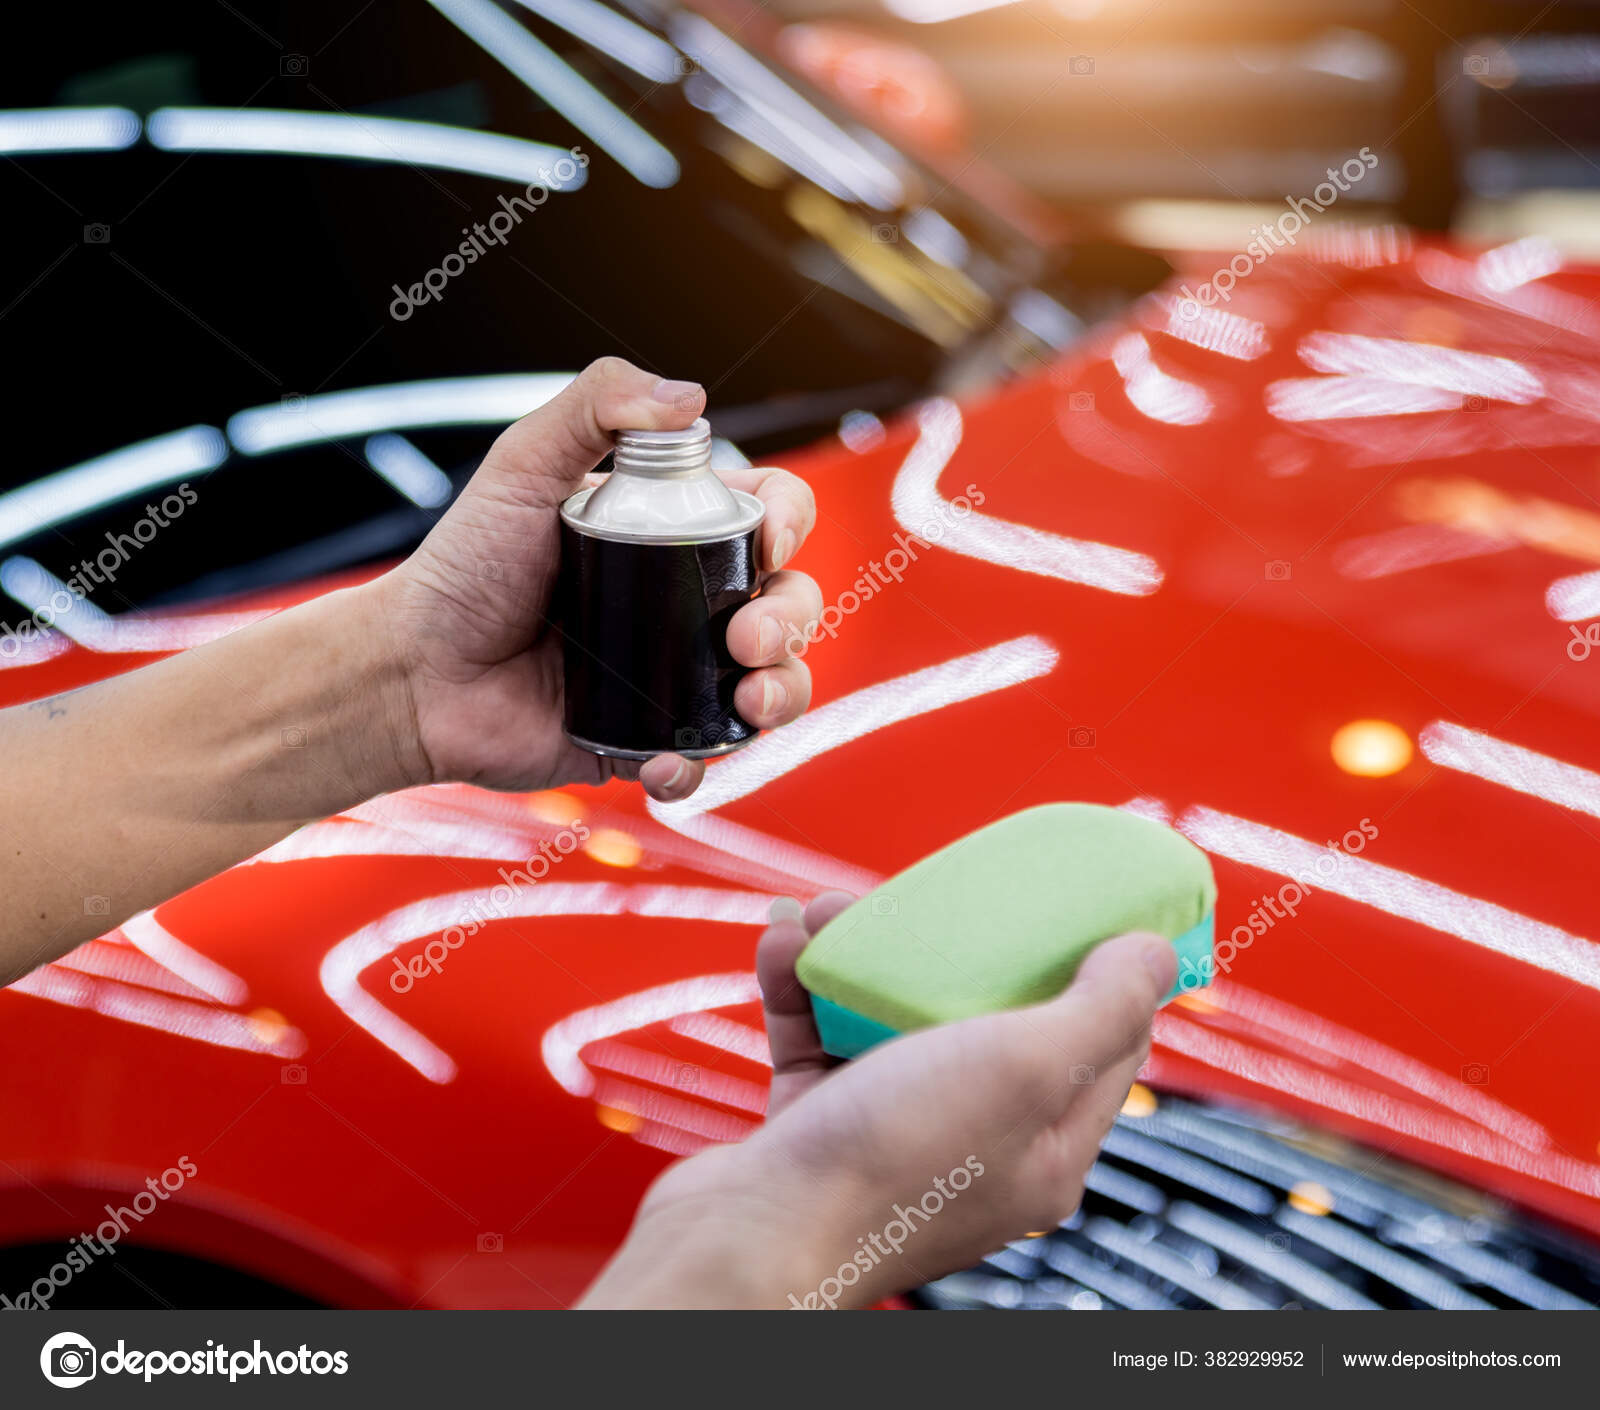 Car Service Worker Applying Nano Coating on a Car Detail Stock Image -  Image of garage, microfiber: 192347895